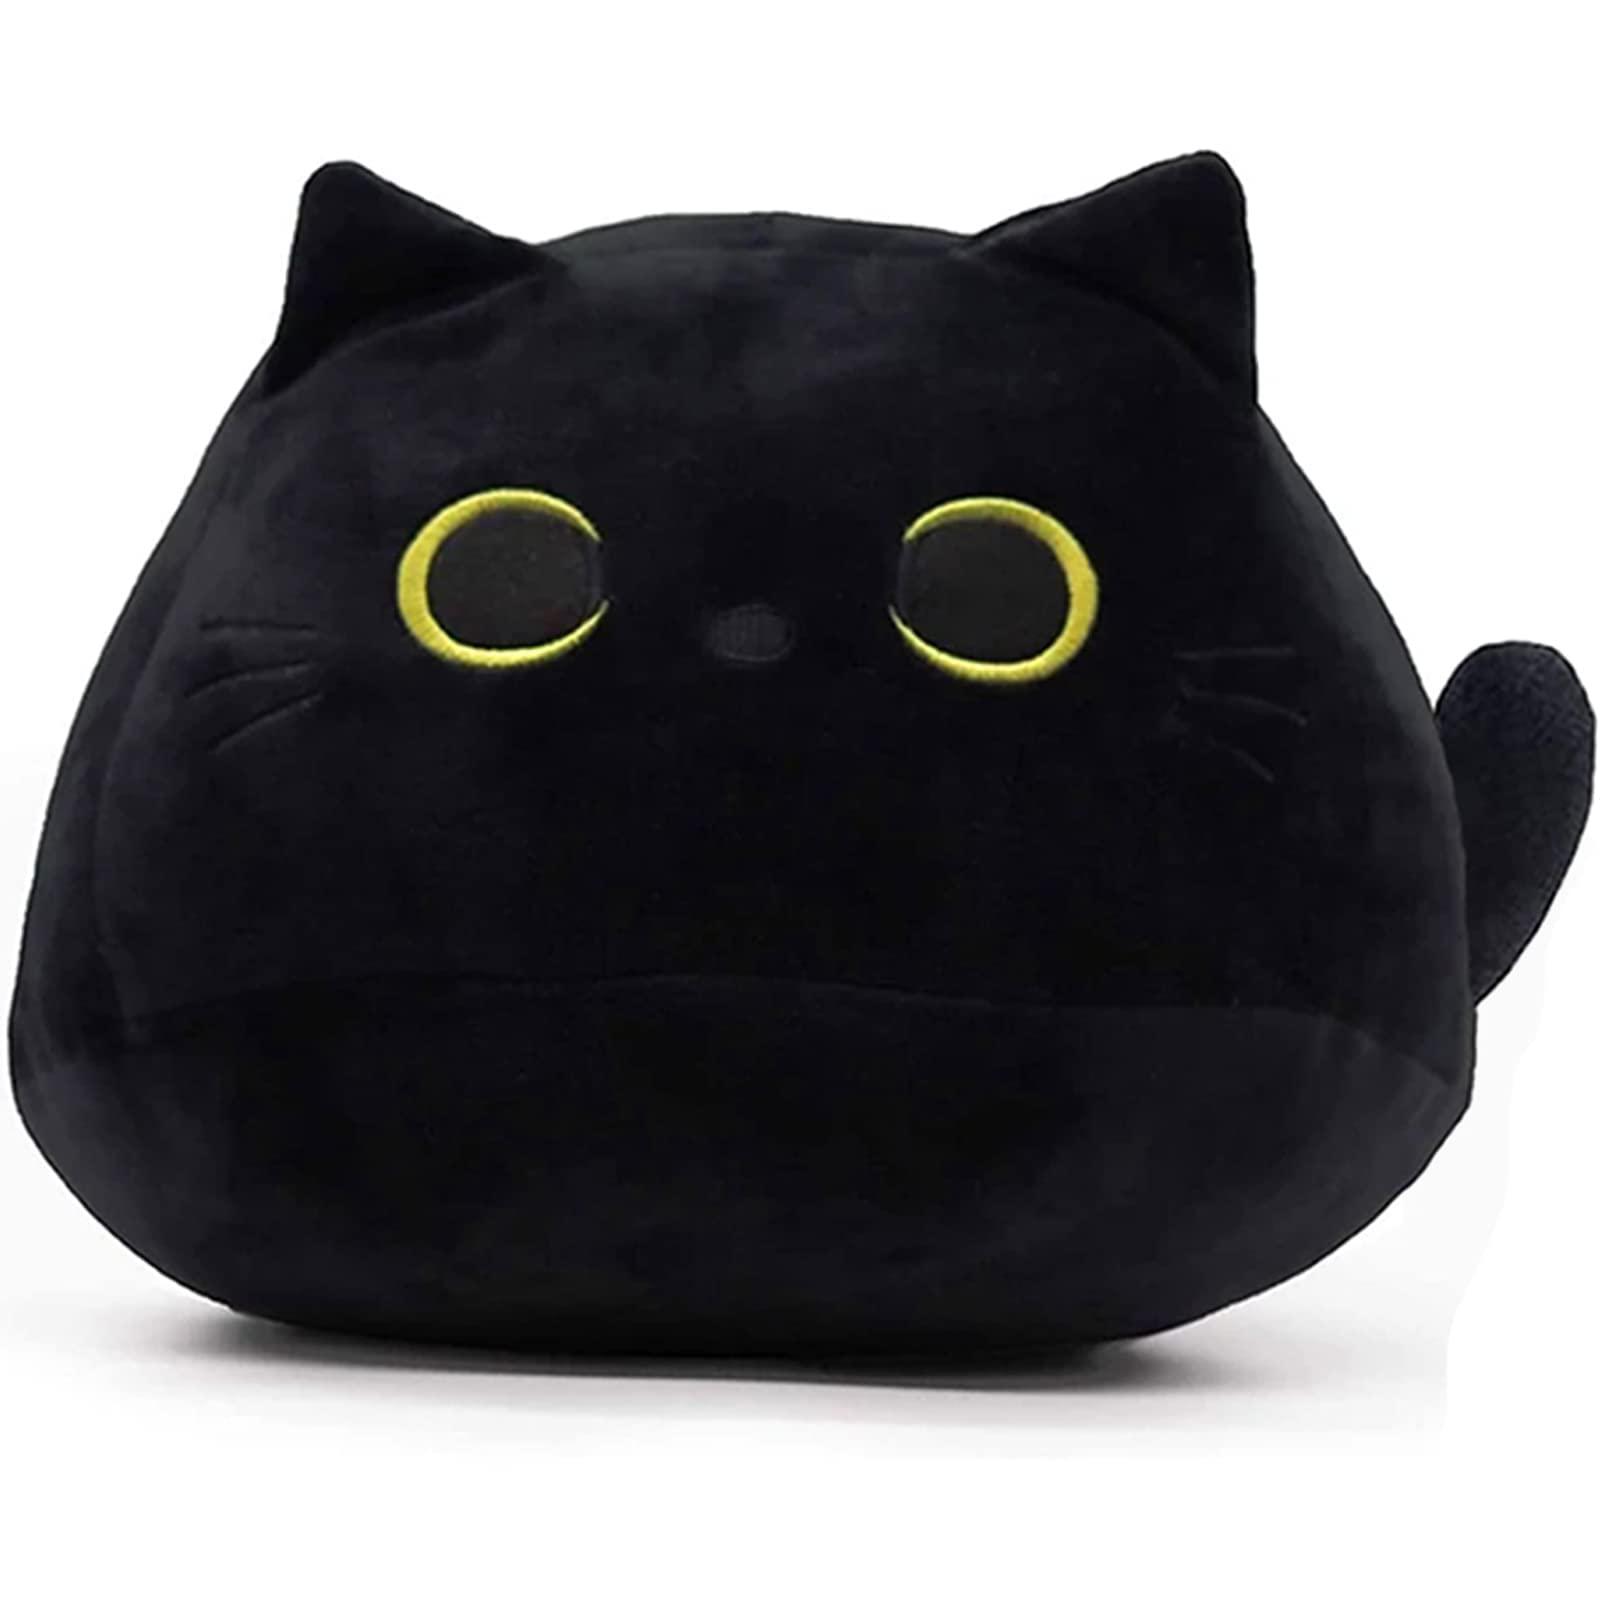 Yoruii yoruii black cat plush toy black cat pillow, 21.6 inch creative cat  shape pillow, cute cat plush toys, stuffed animal pillow